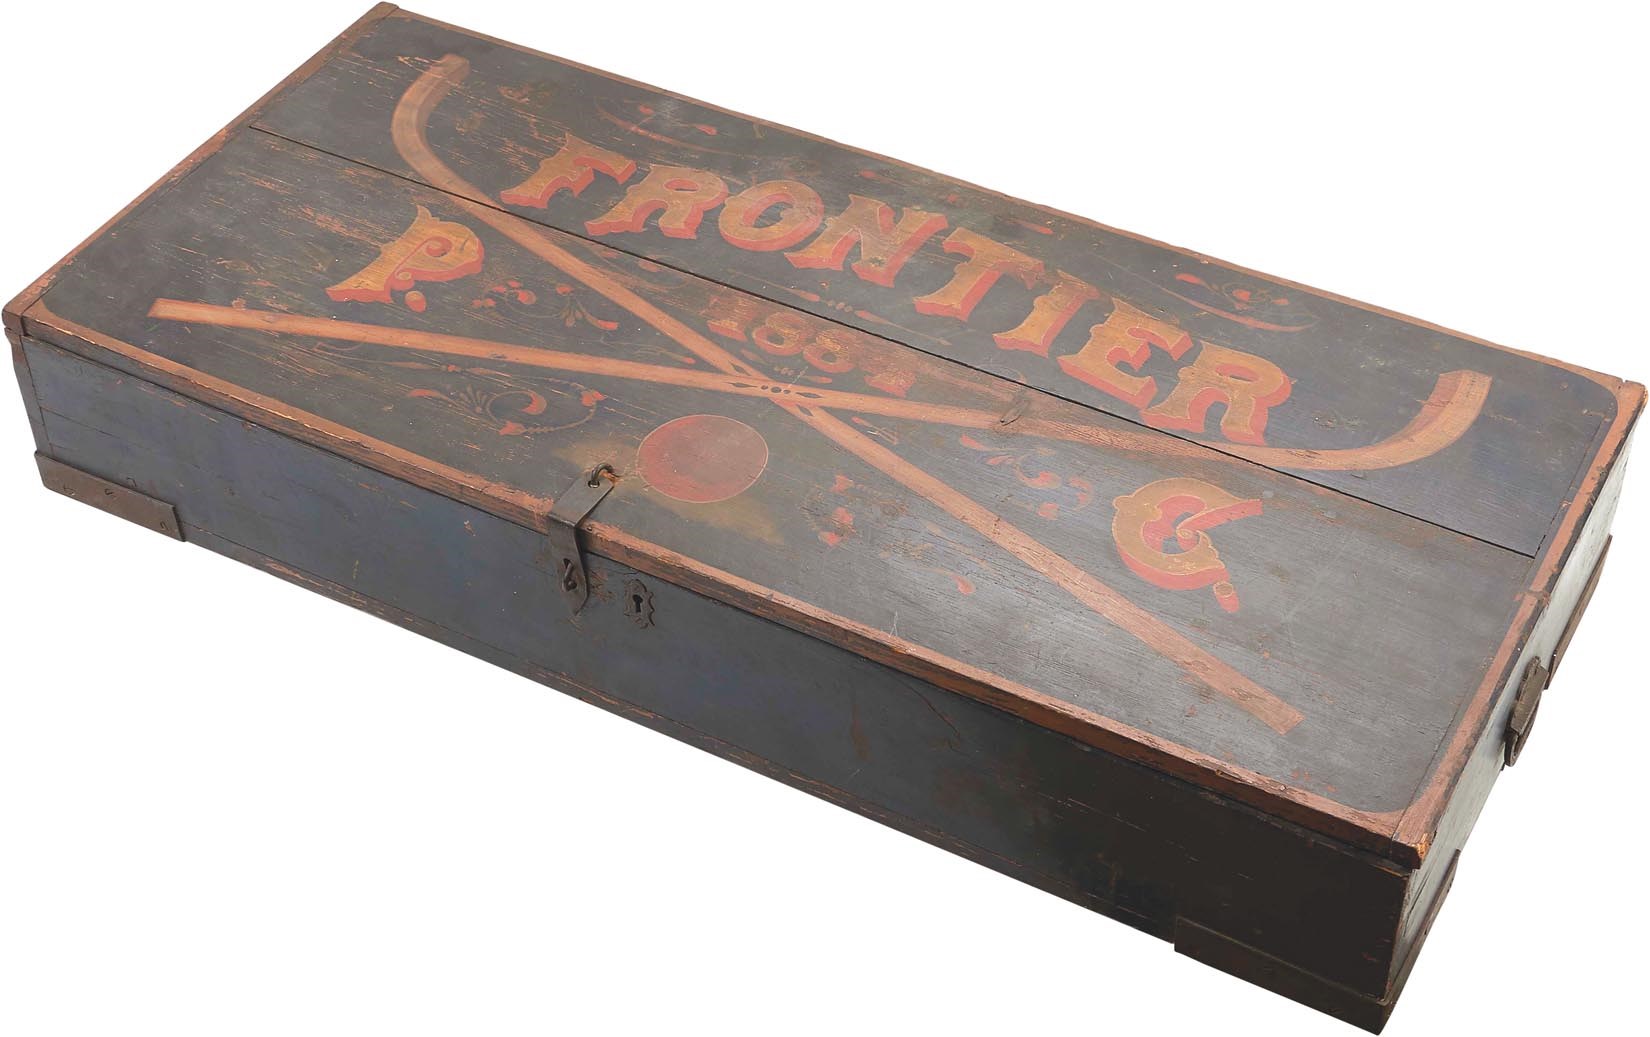 - 1884 Frontier Hockey Team Equipment Trunk